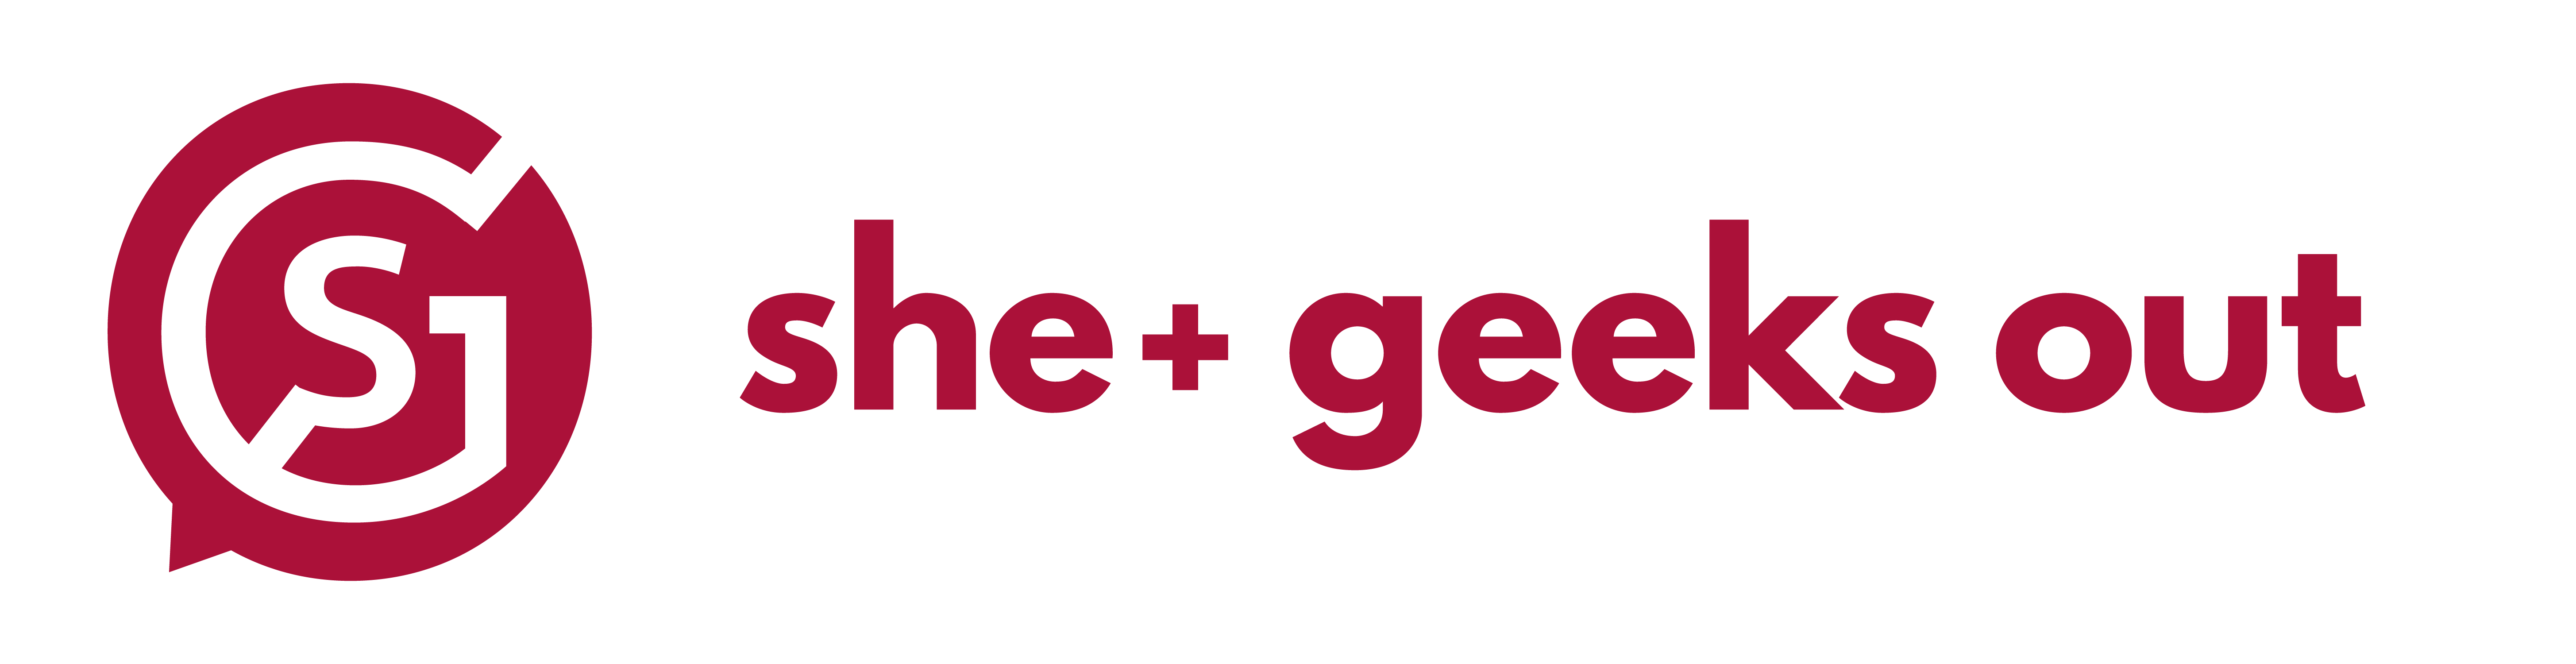 S+GO-Horizontal-Logo-Red@1.5x